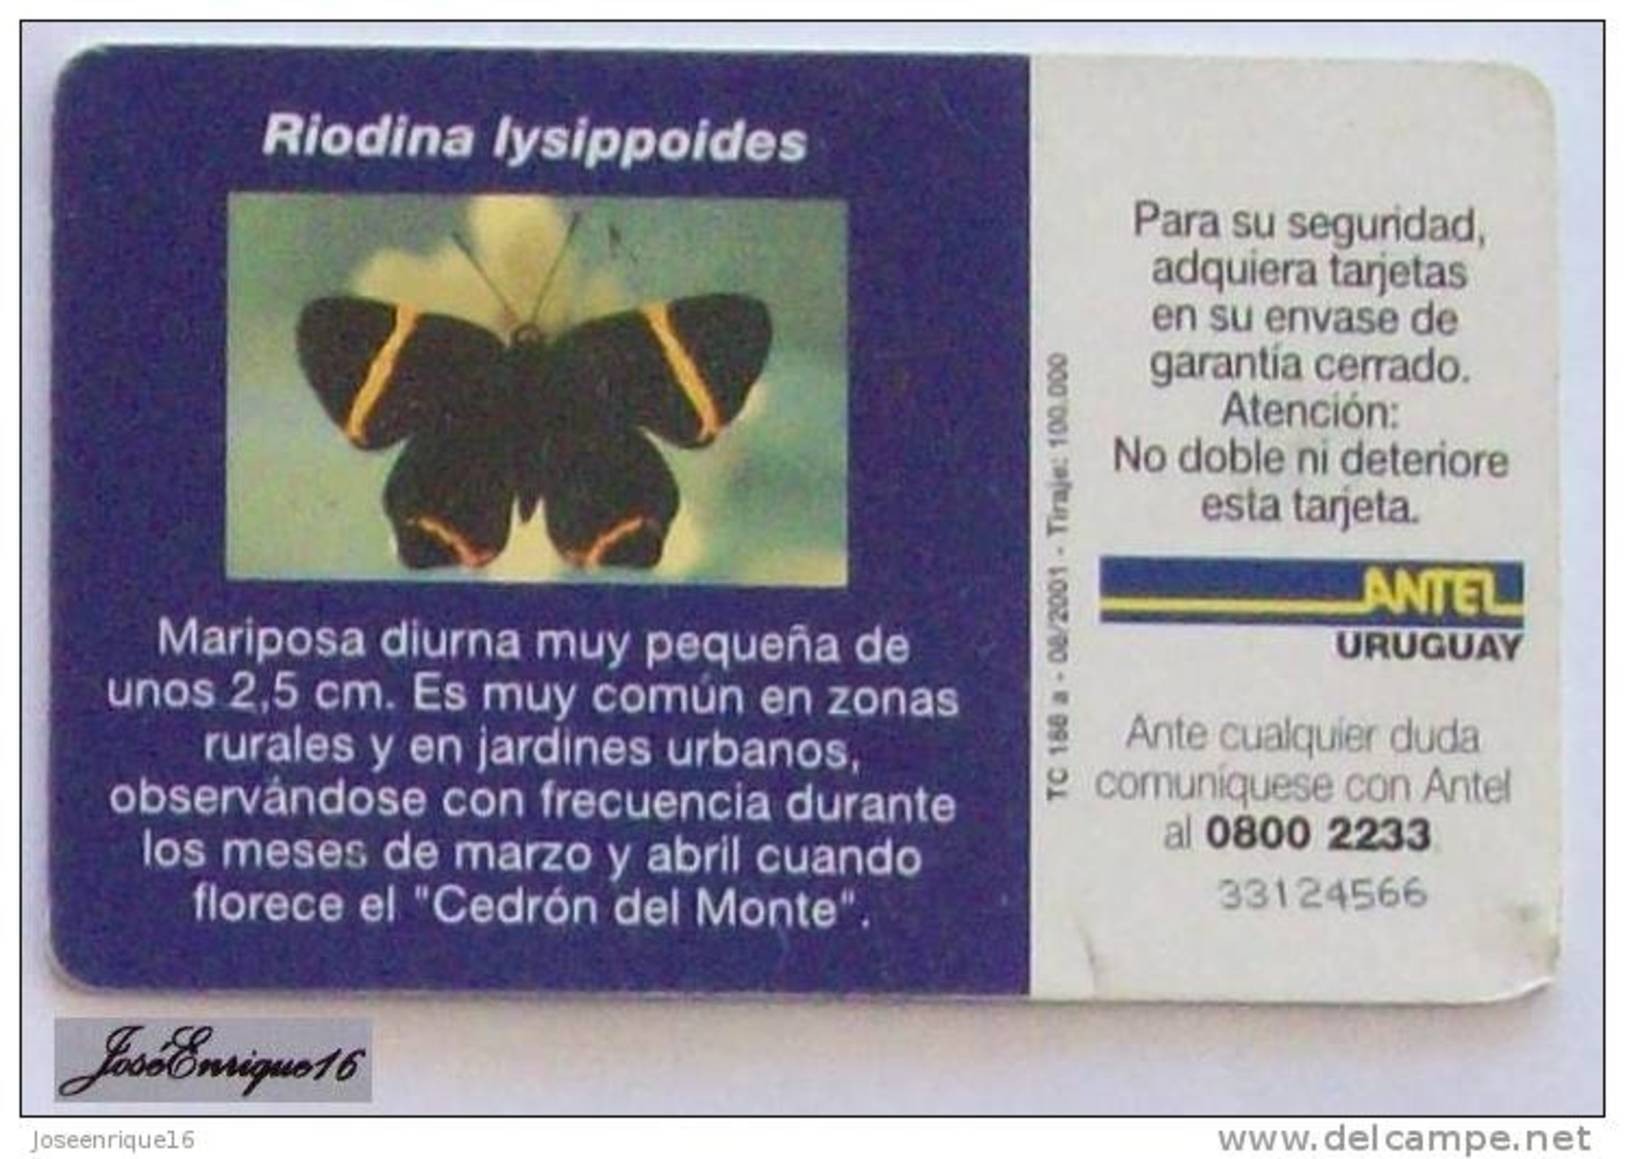 TC 186a MARIPOSA, Butterfly, RIODINA LYSIPPOIDES, URUGUAY, ANTEL - Uruguay